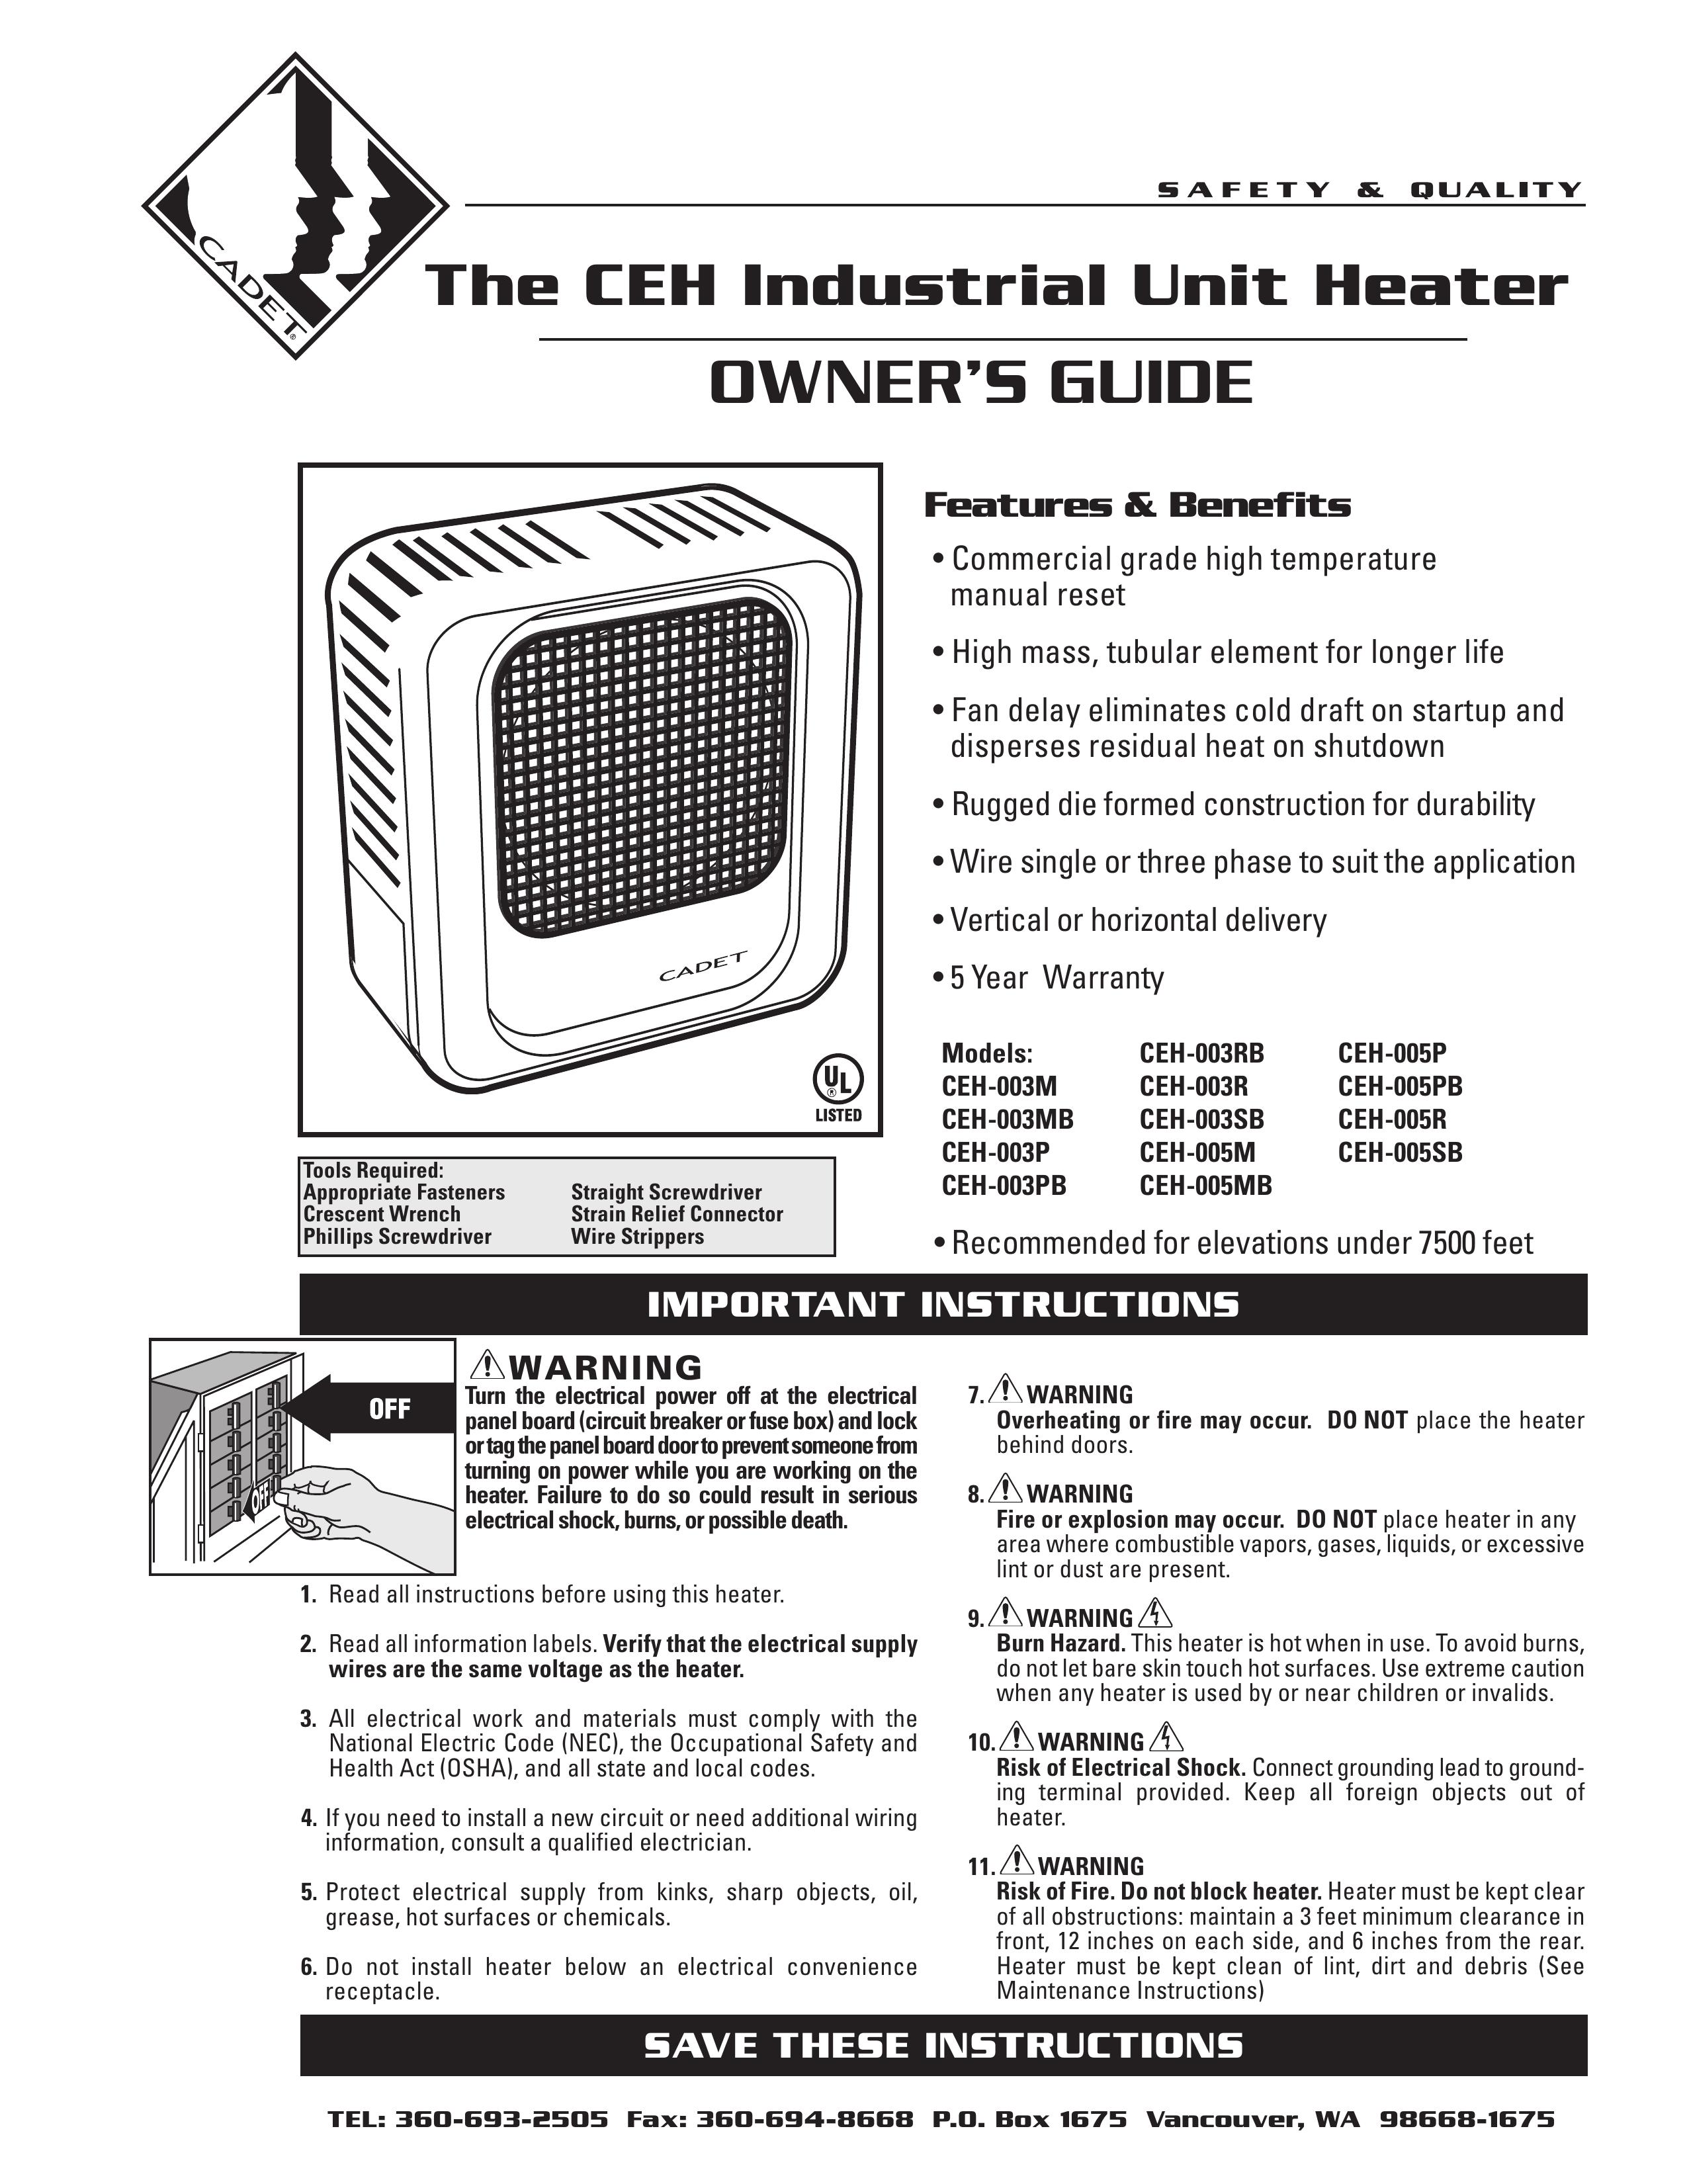 Cadet CEH-005P Patio Heater User Manual